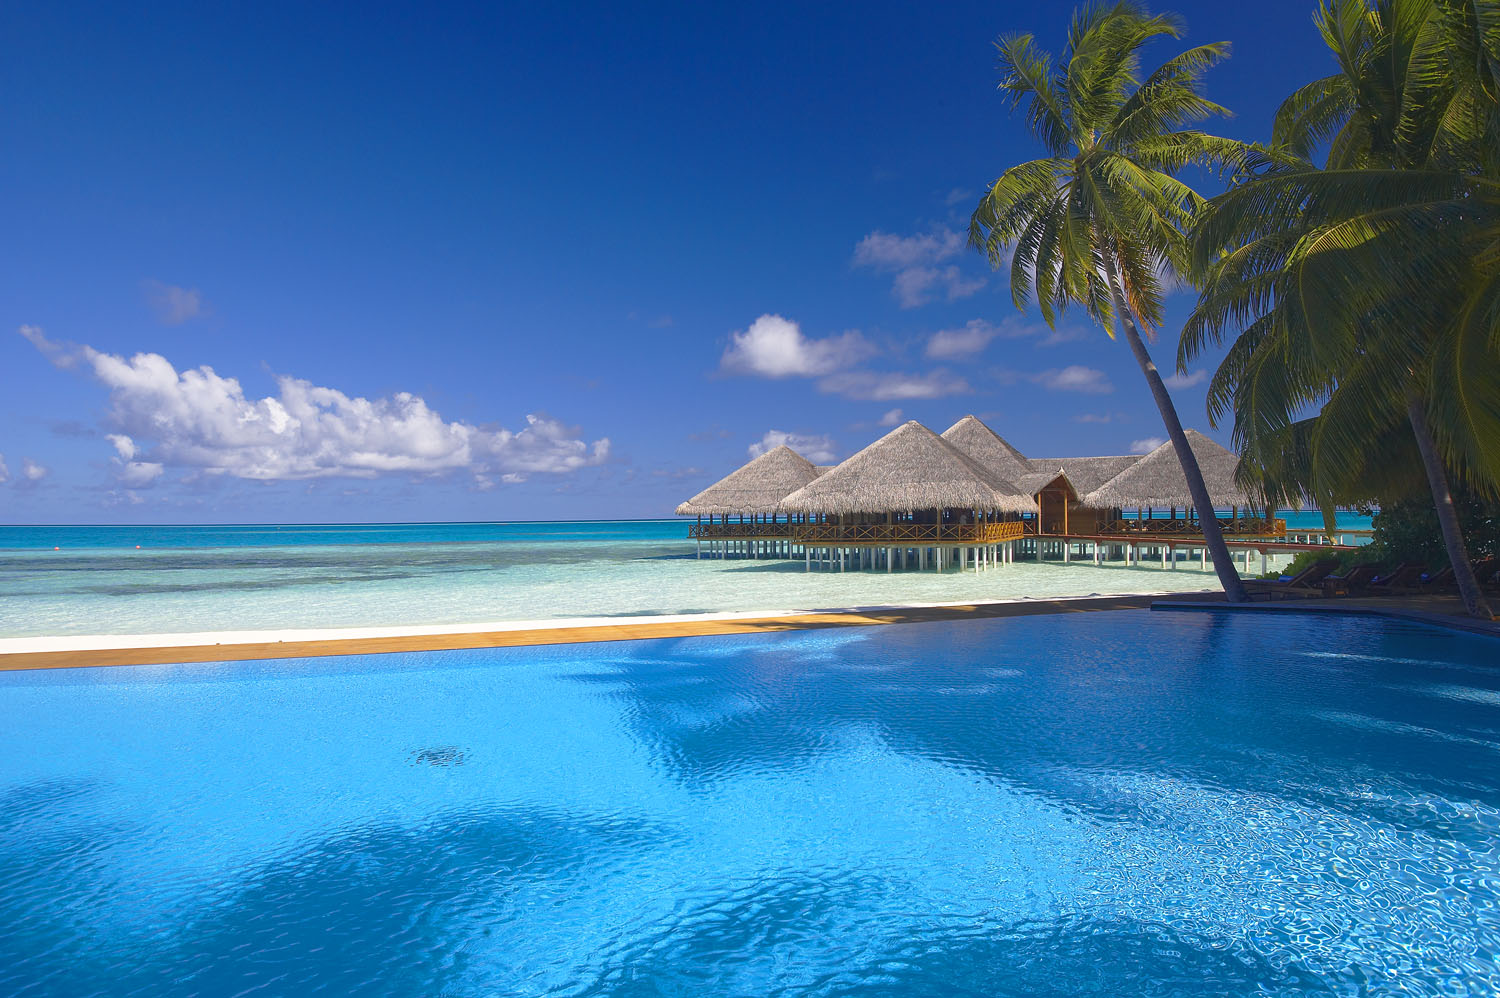  islands maldives sun island beach vacation white sand email this